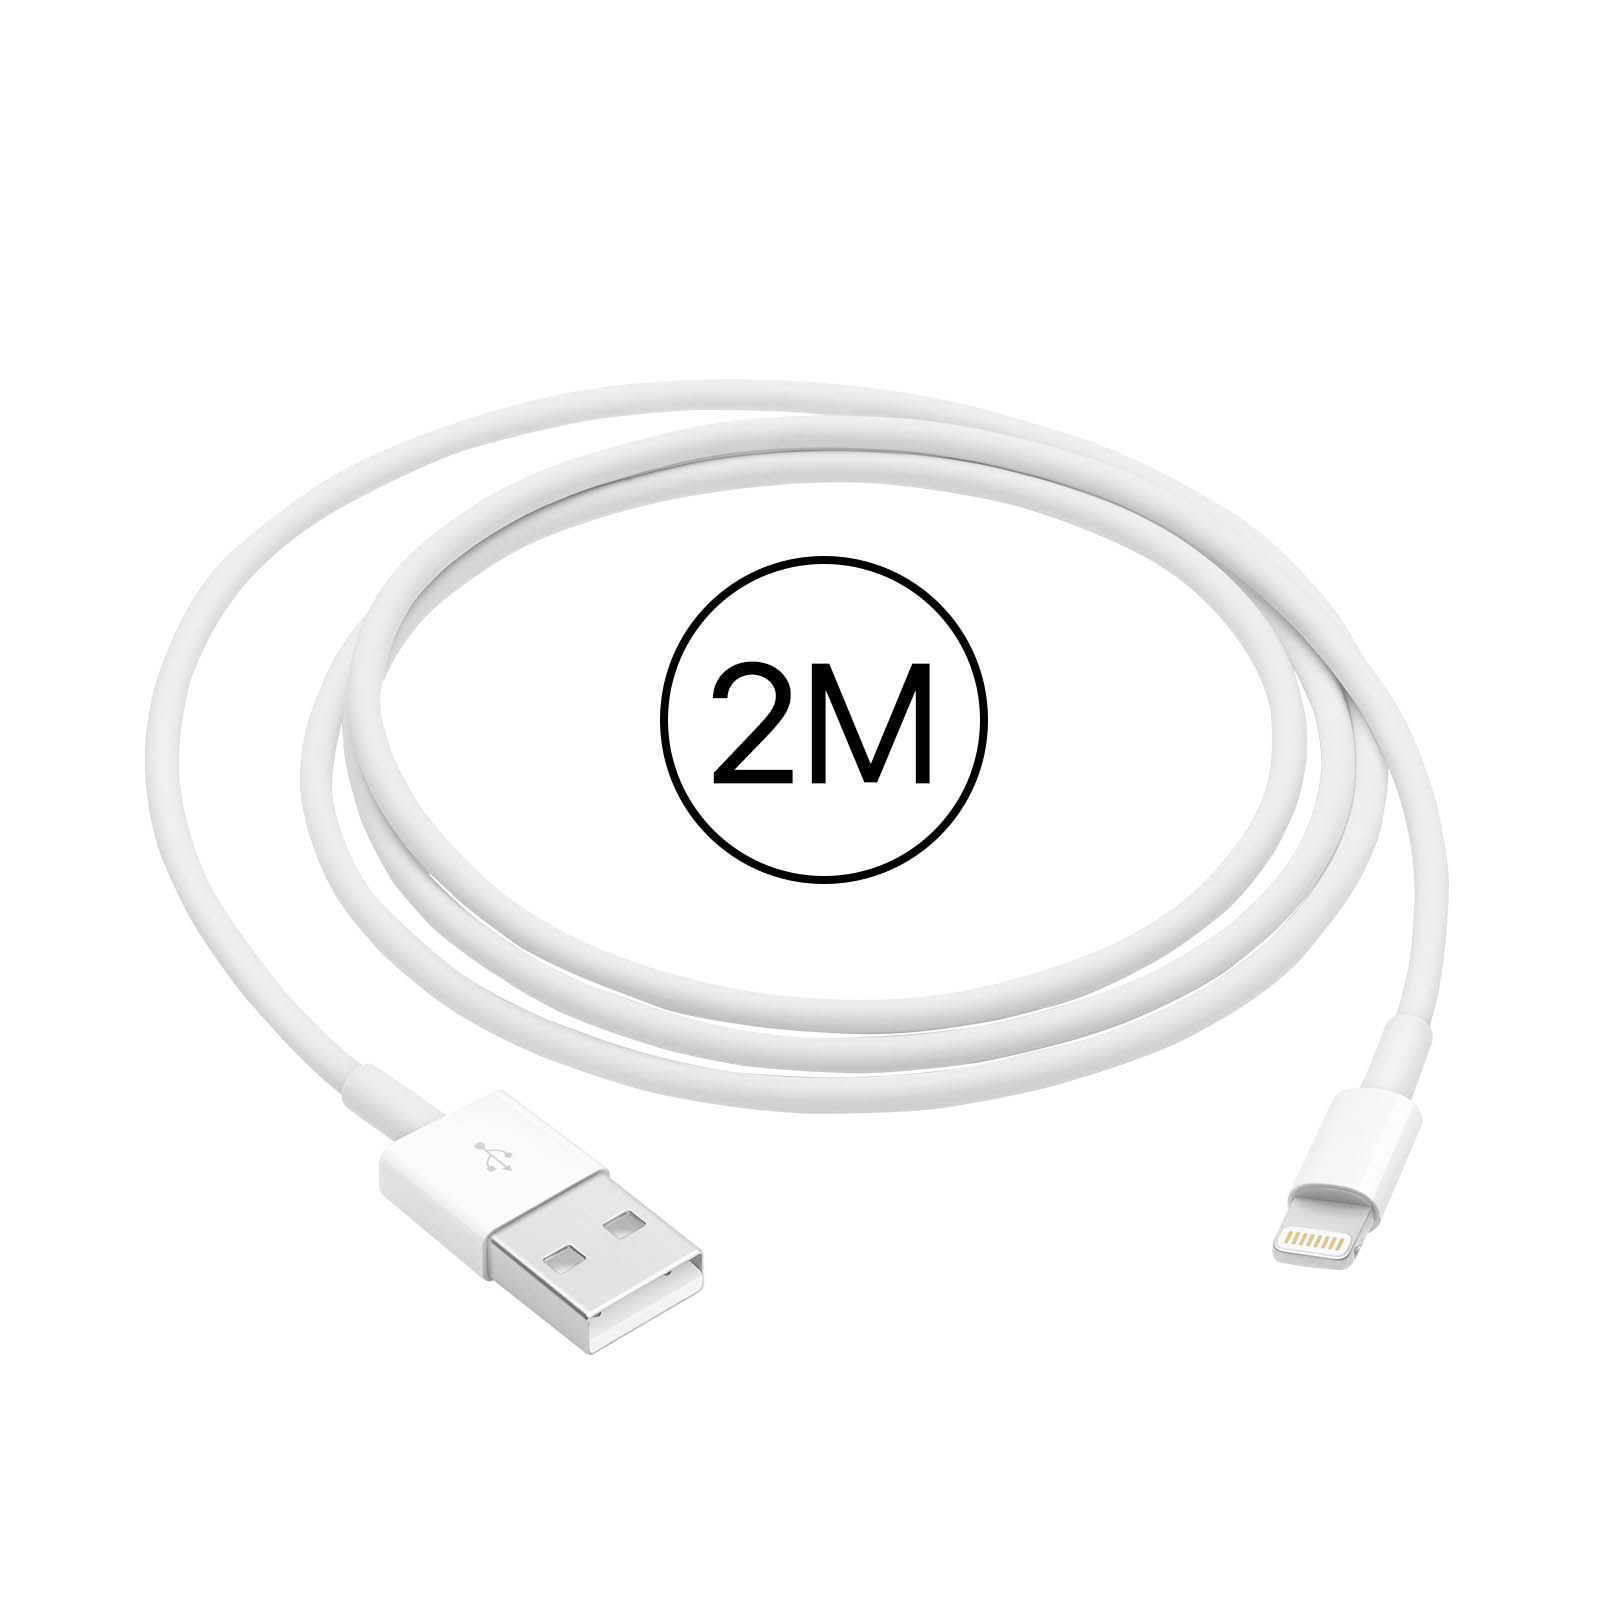 iPhone/iPad Kabel - Original Apple Lightning Anschluss 2m - Apple